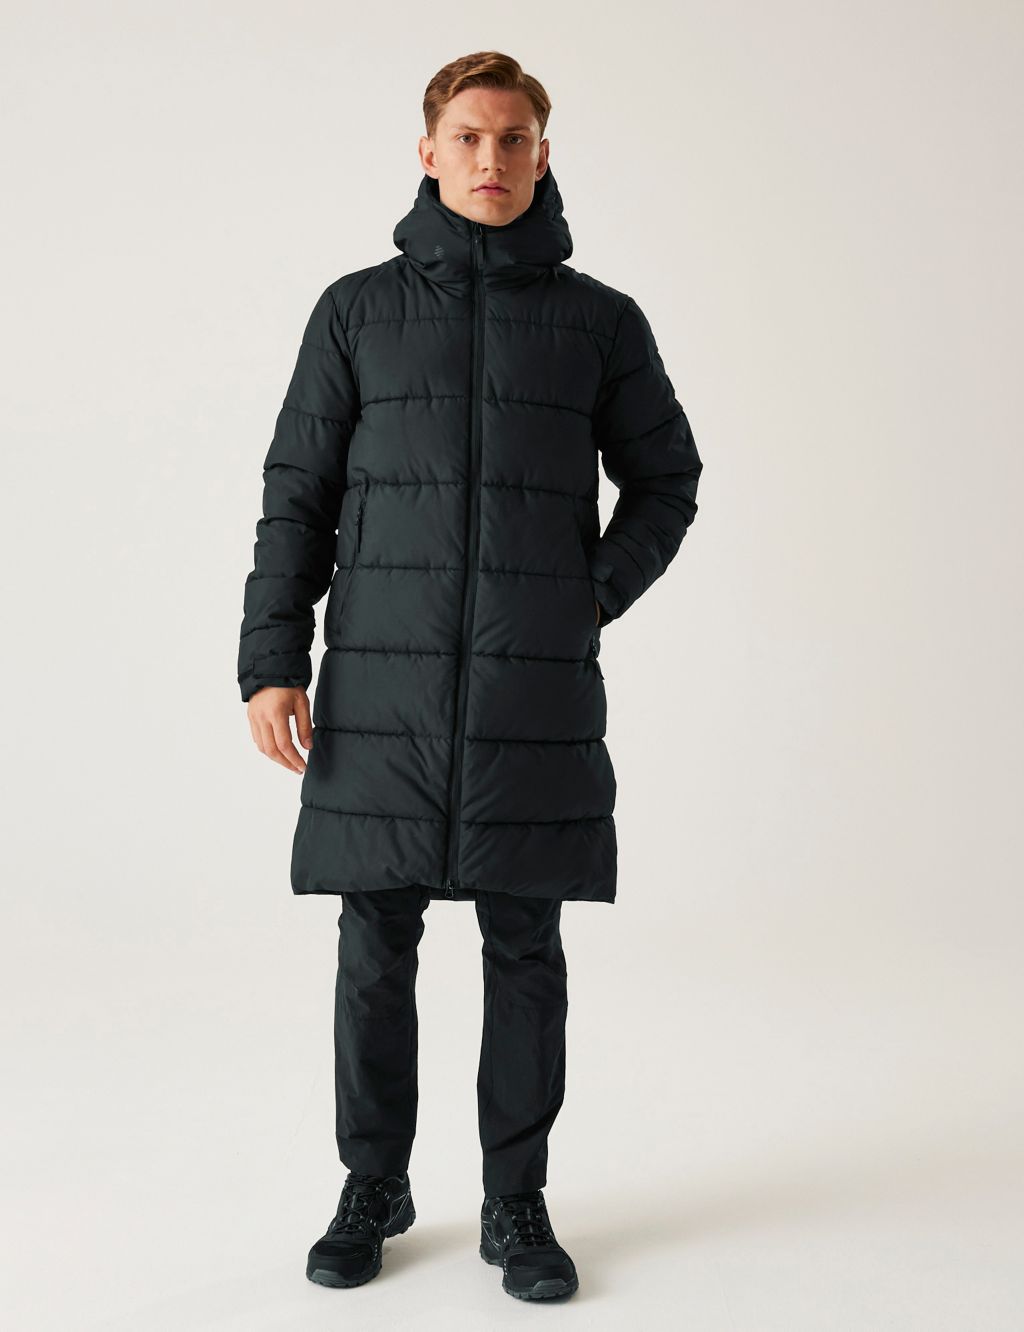 Clearance Men's Lightweight Packable Accent Puffer Jacket Water Resistant  Winter Jackets Full Zip Stand Collar Puffer Jacket 